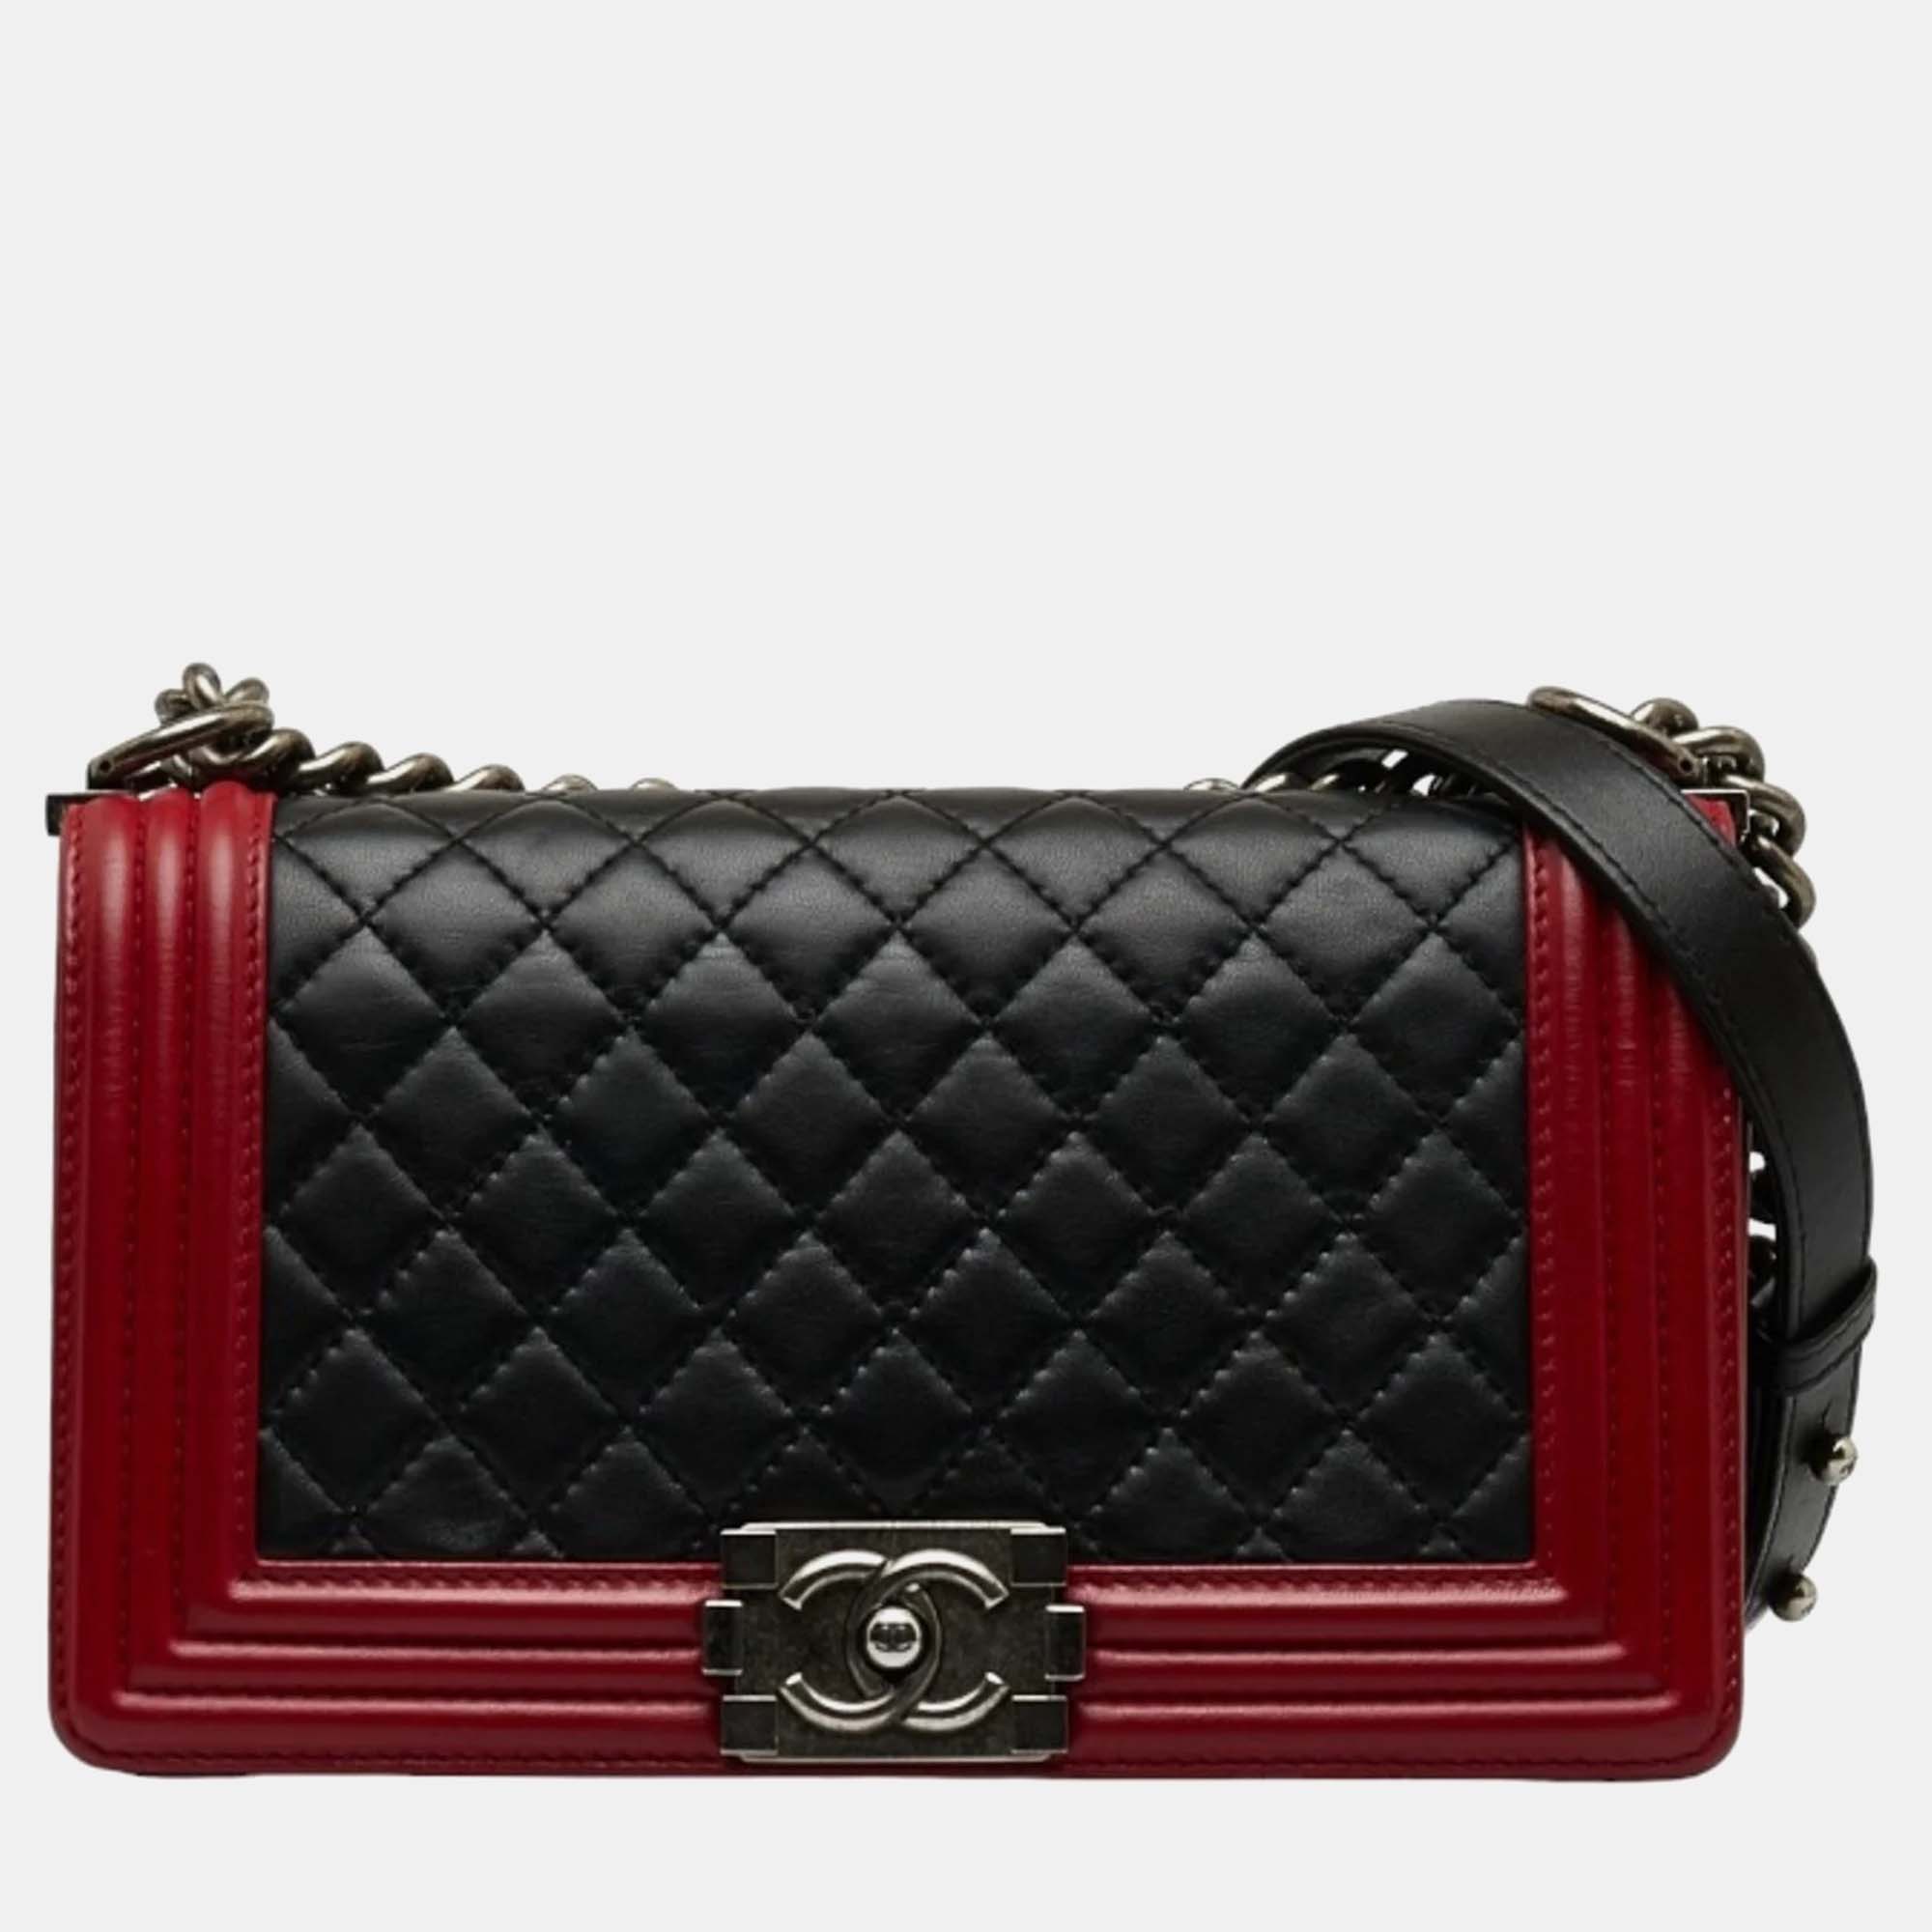 Chanel black/red caviar leather medium boy shoulder bags